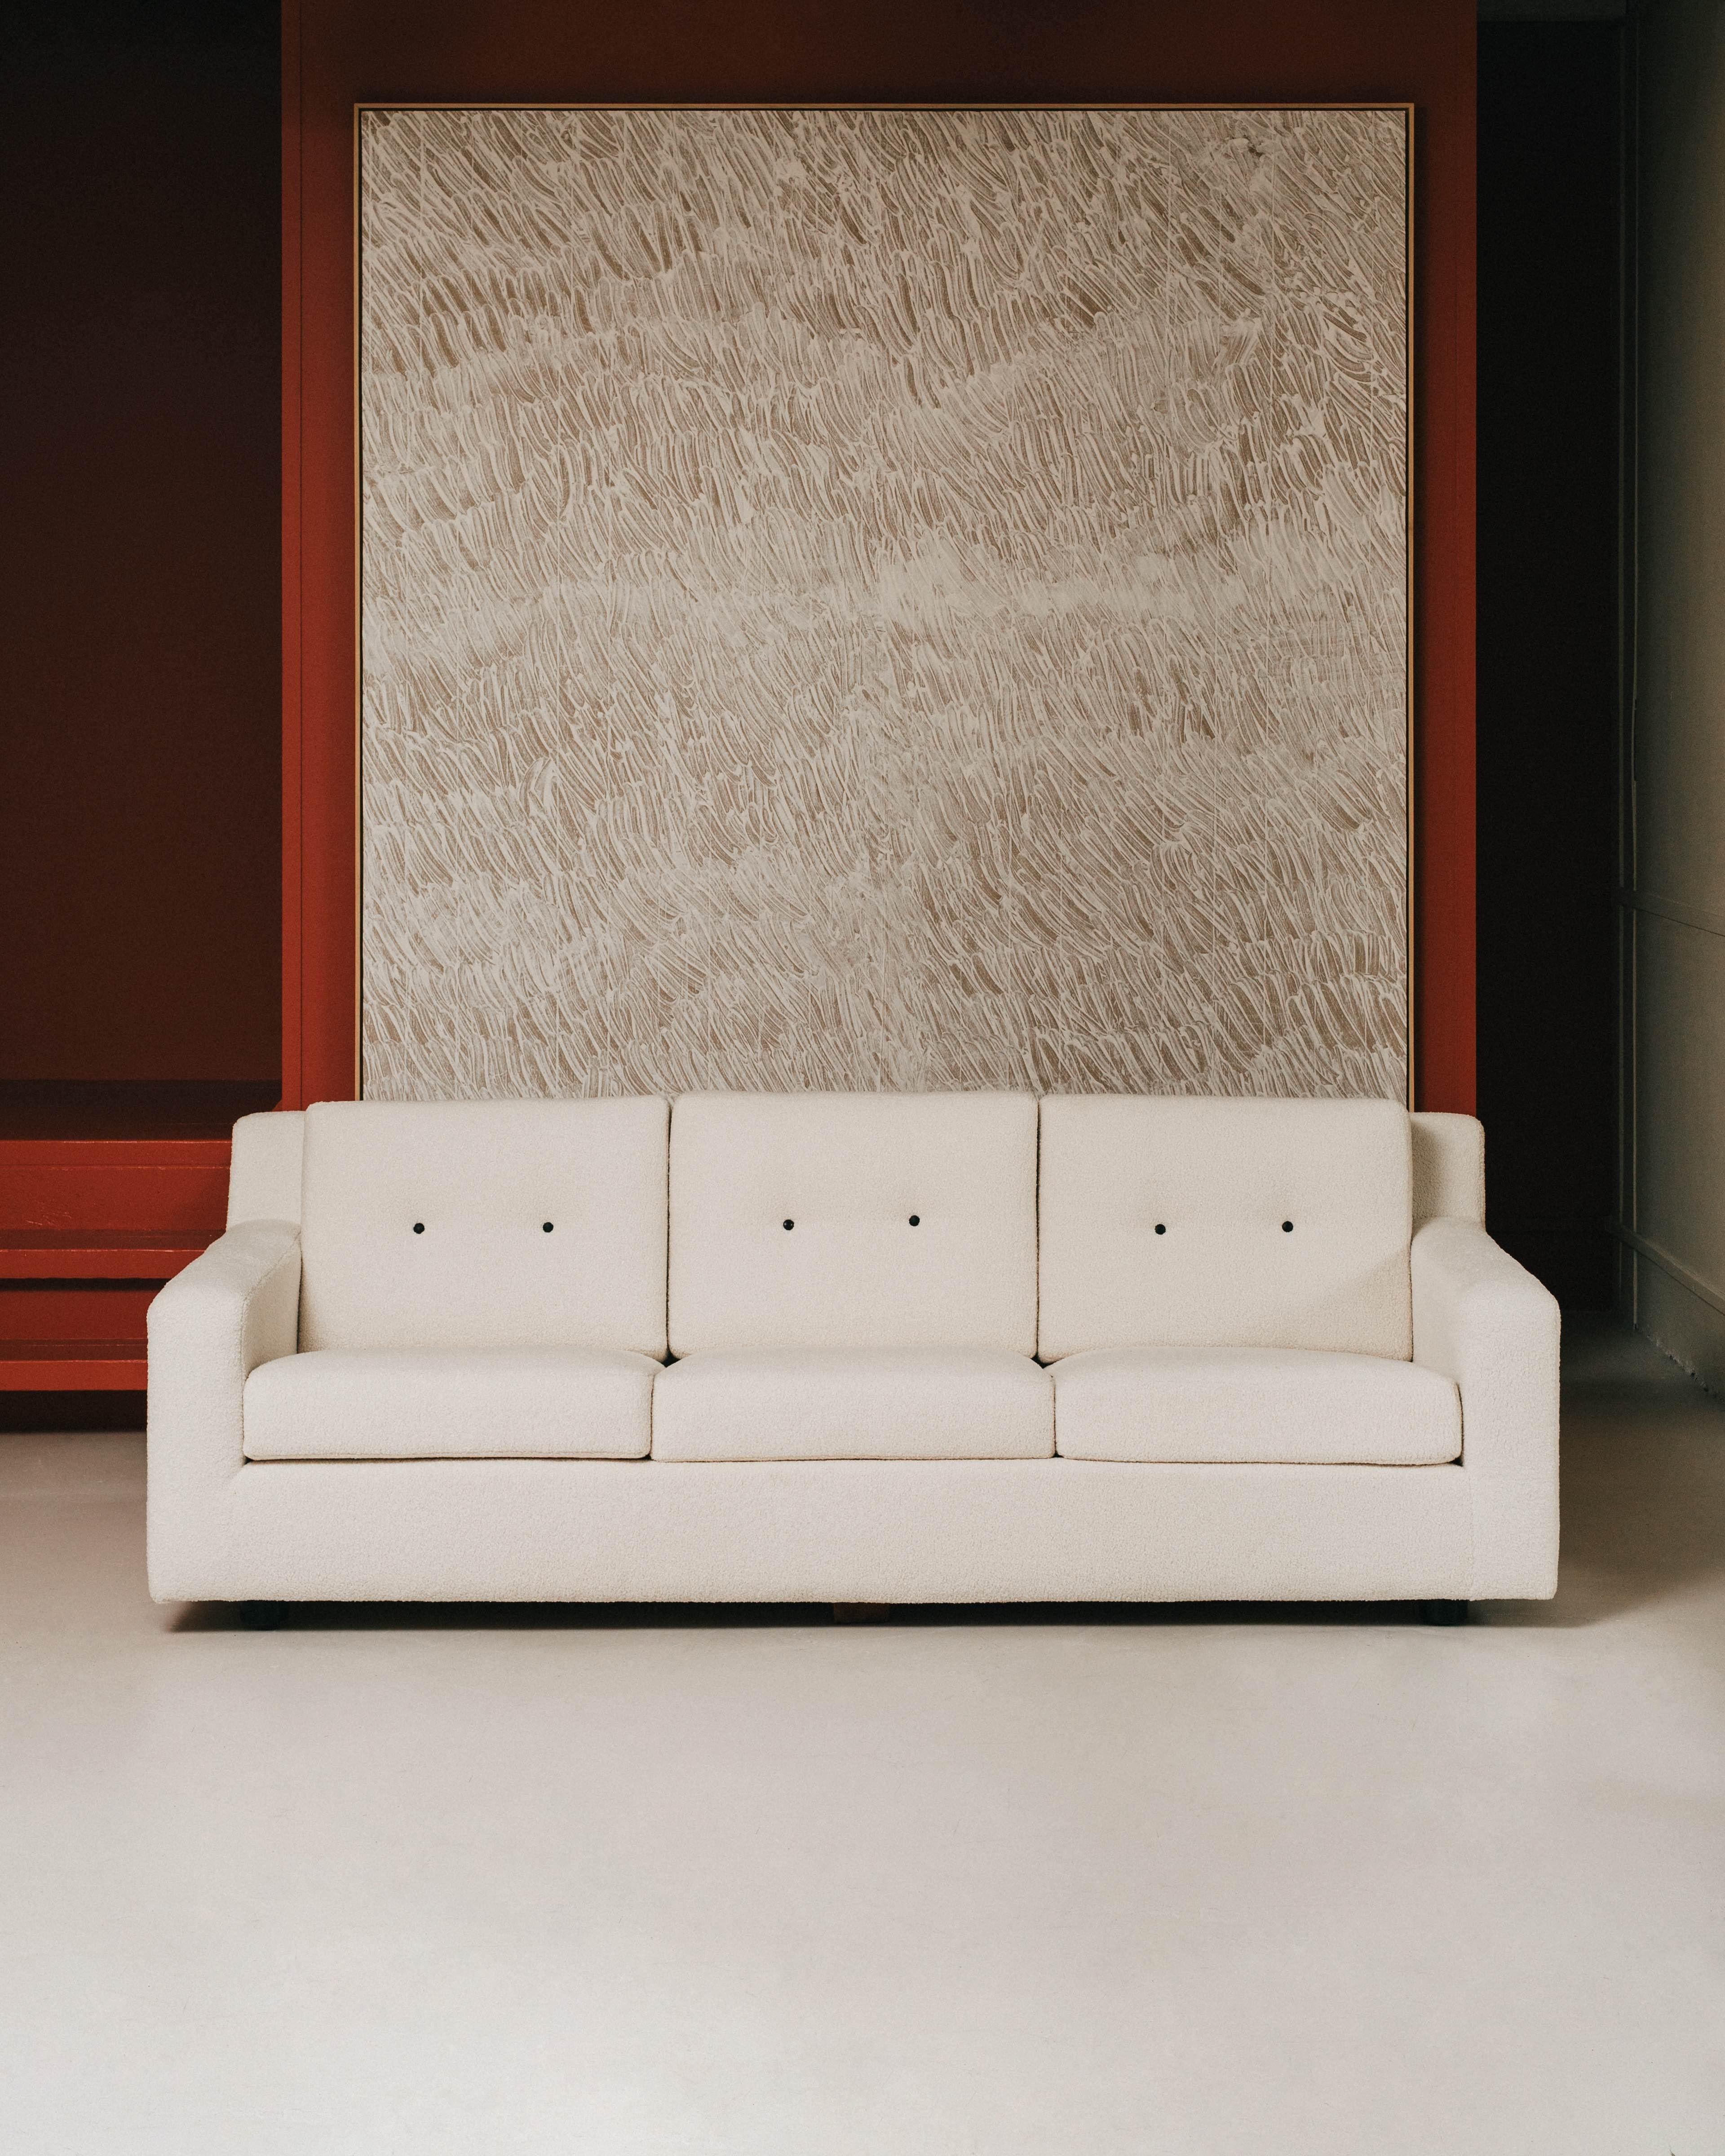 Large three-seater reception sofa, Bultex foam, leather and fur fabric by Maison Froca
Designer Jean-Charles de Castelbajac
Editor Ligne Roset
1988.